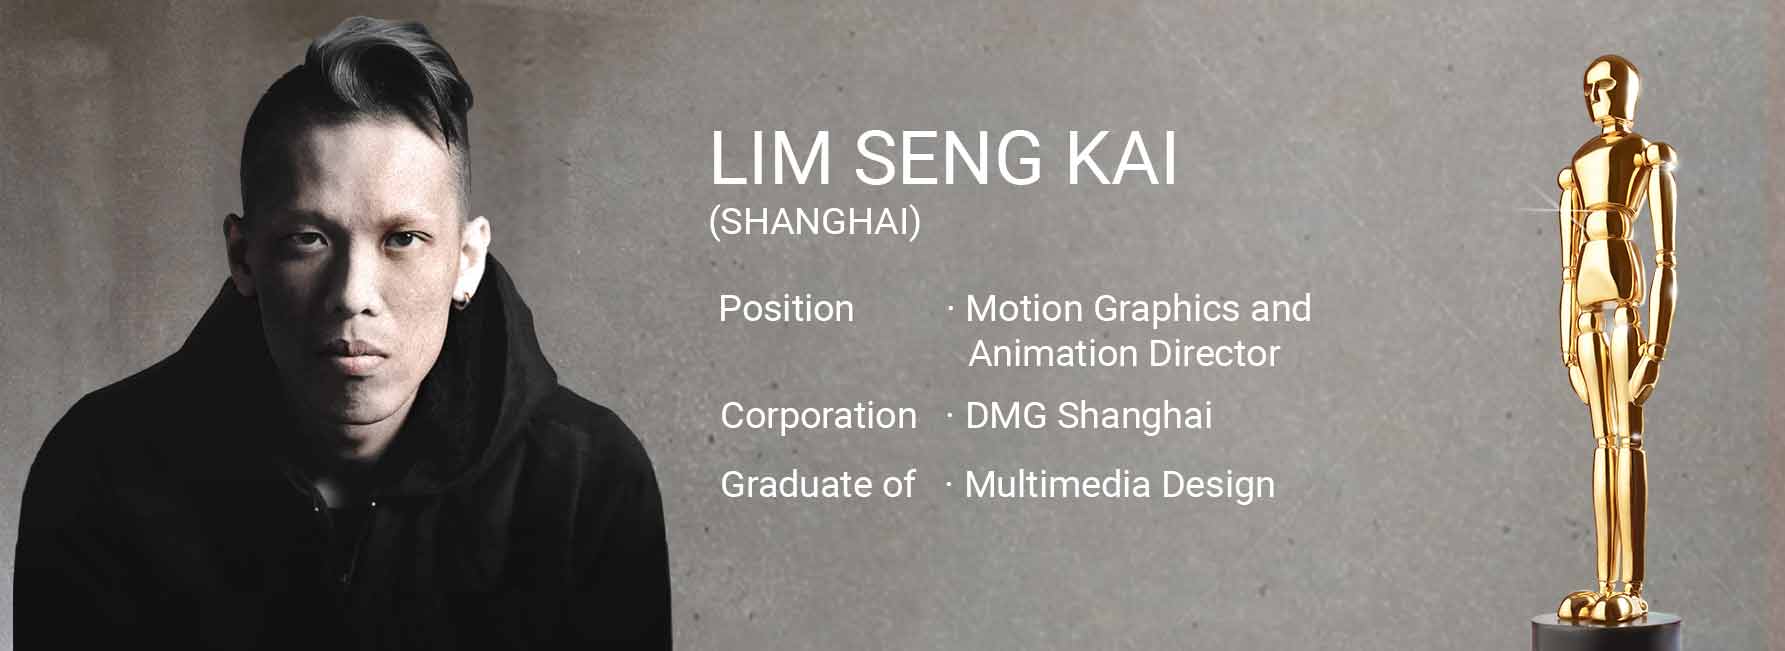 Lim Seng Kai